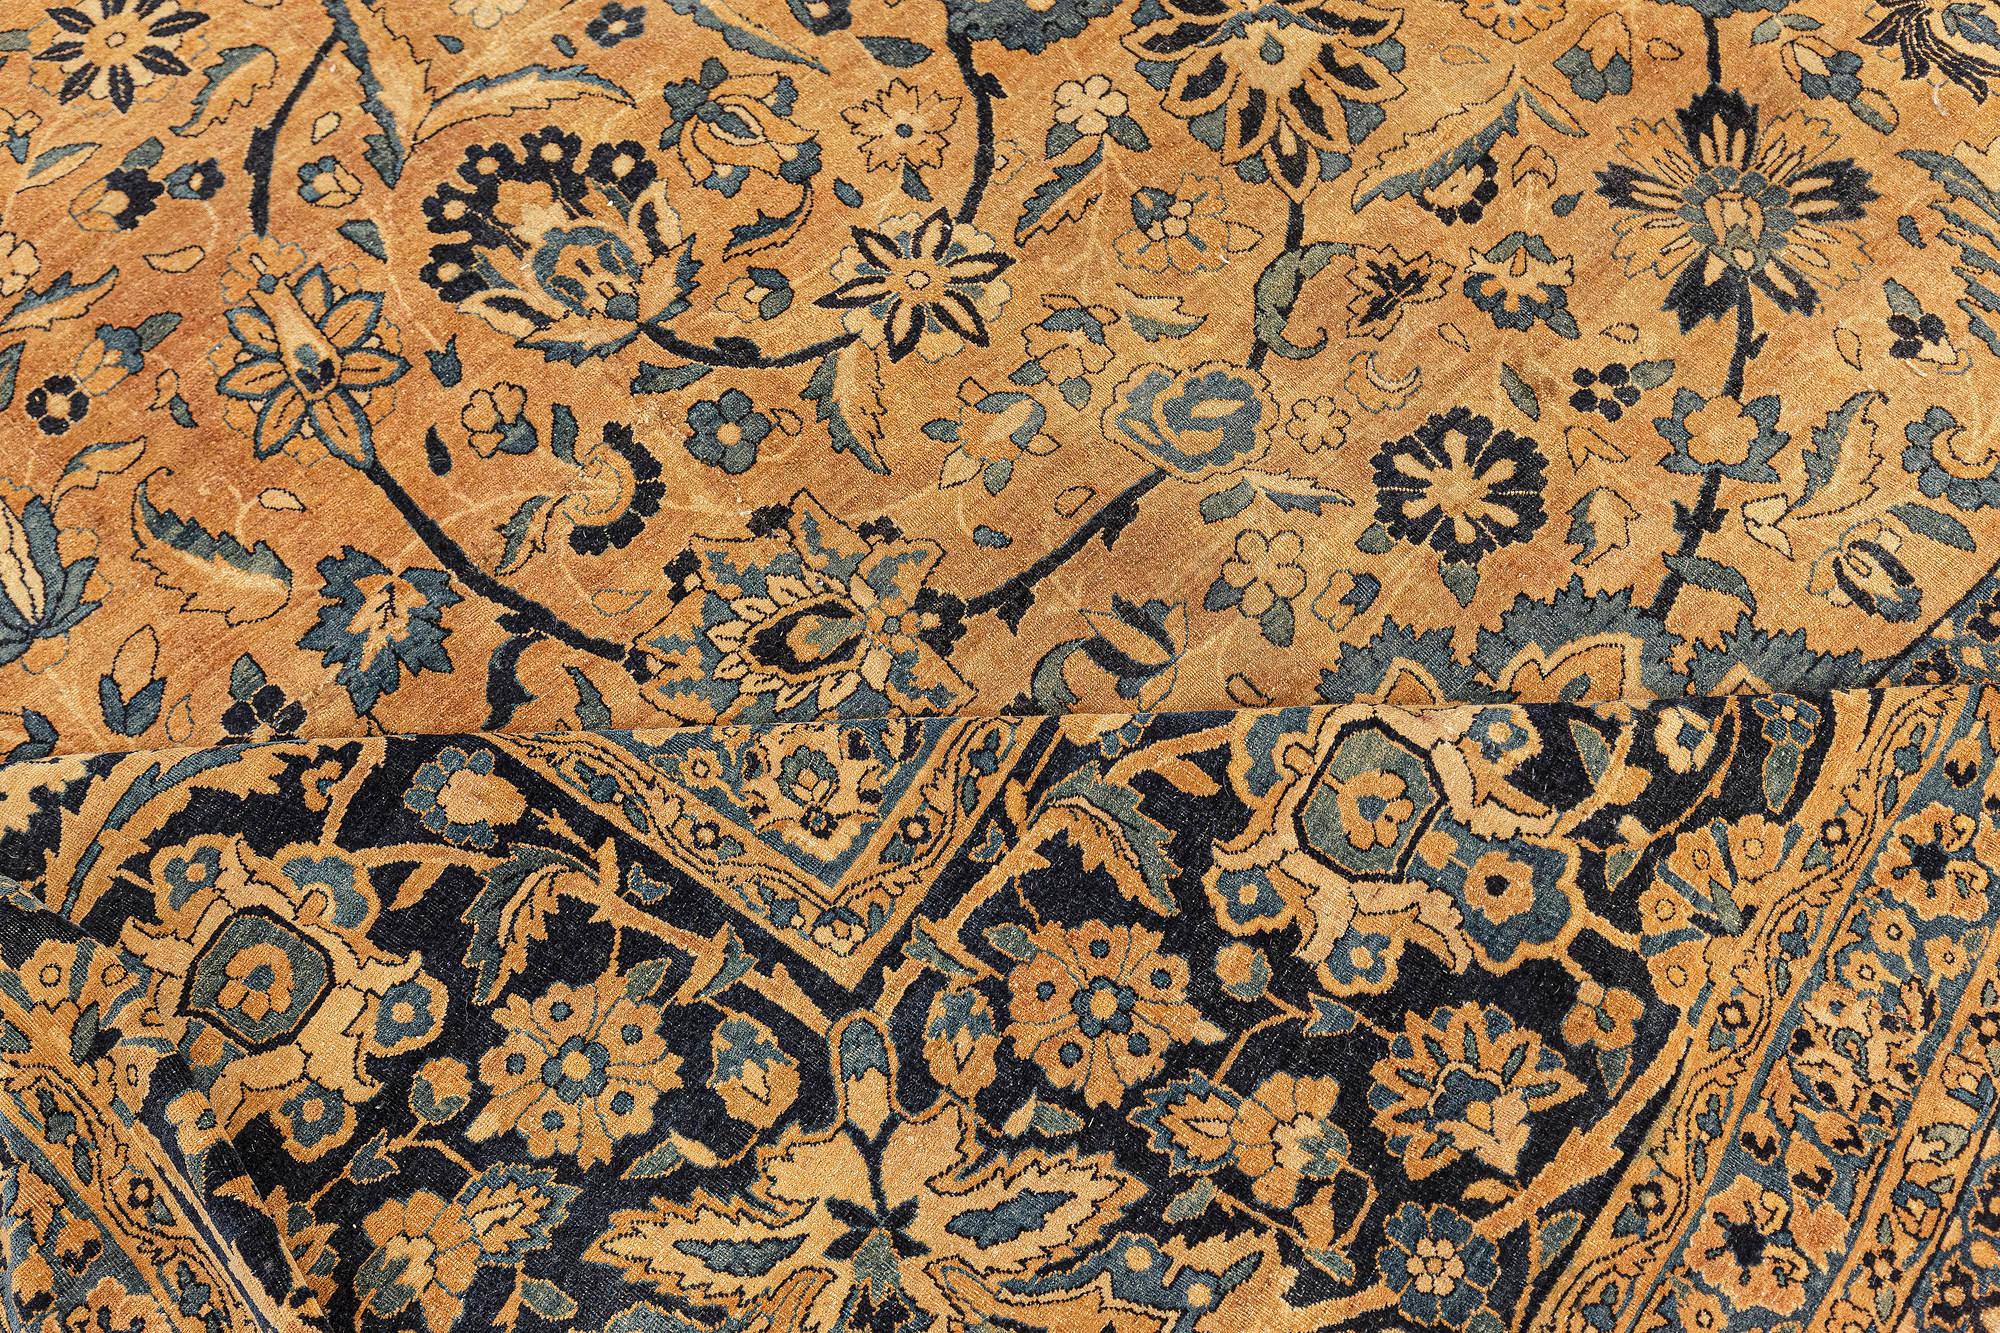 Oversized antique Persian Kirman botanic handmade wool rug
Size: 14'7